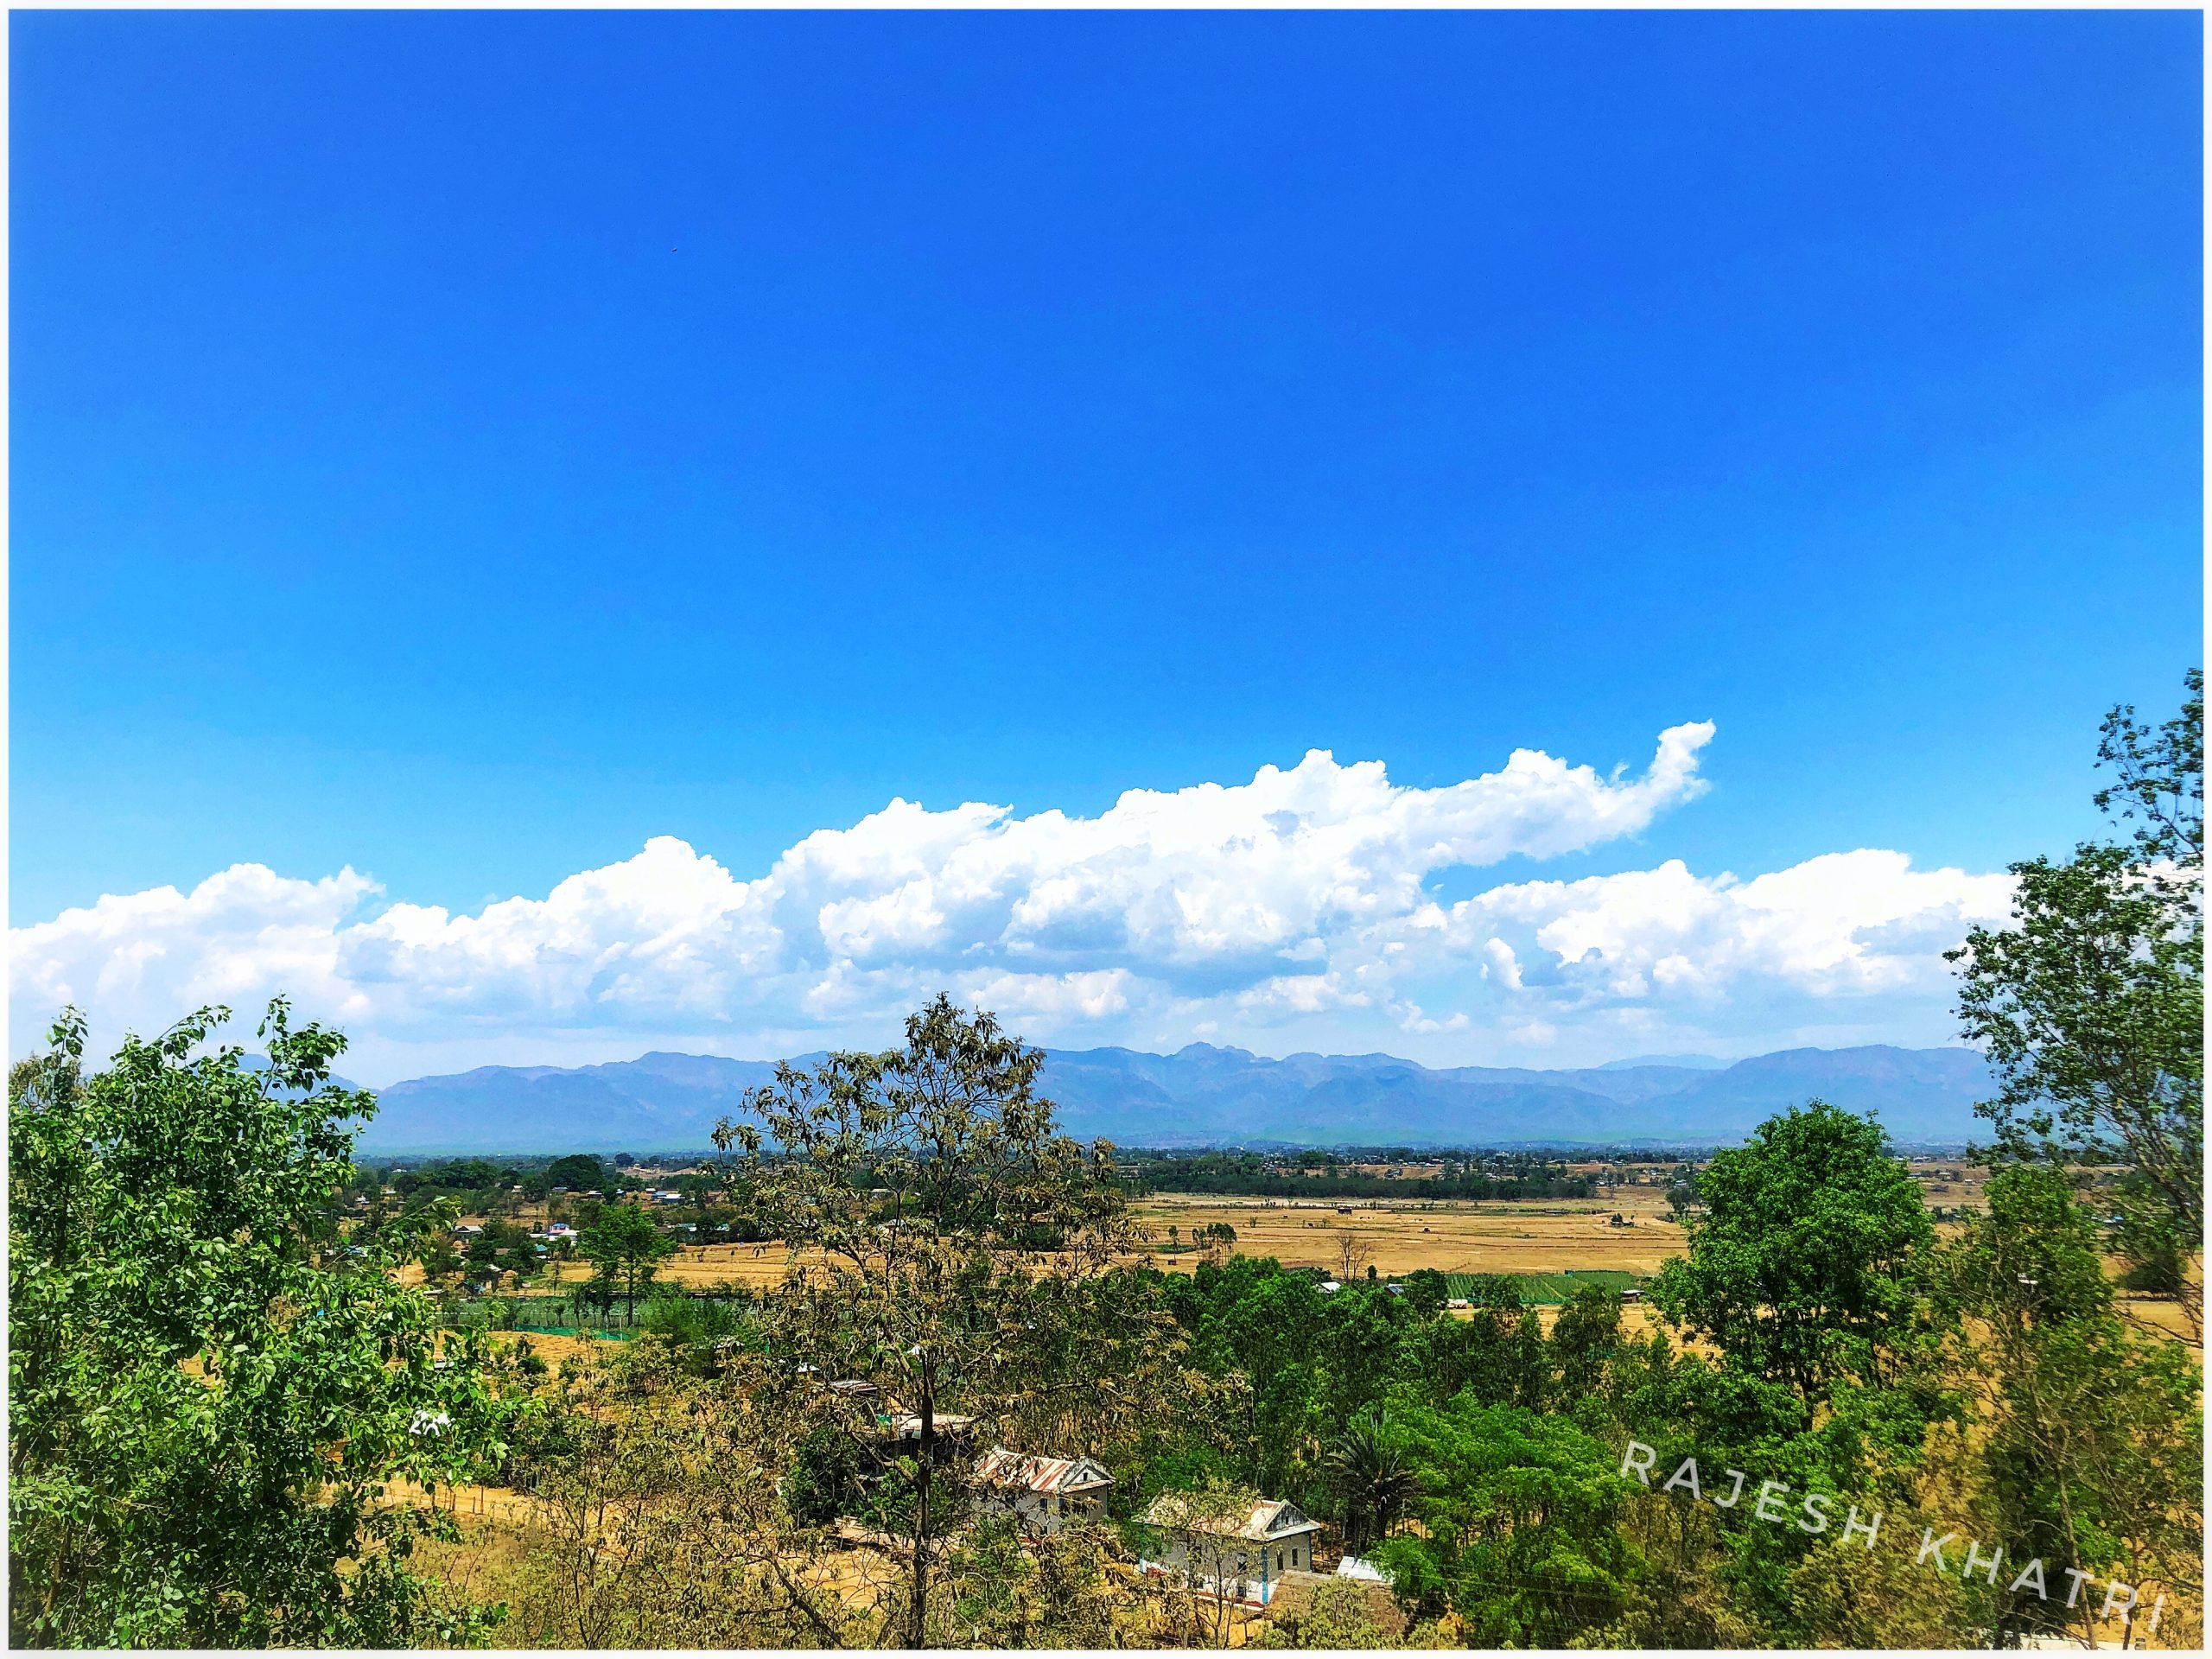 beautiful sky, best image 1, dang ko mausam, nepal ko mausam, dang valley, dang deukhuri valley, best image of Nepal